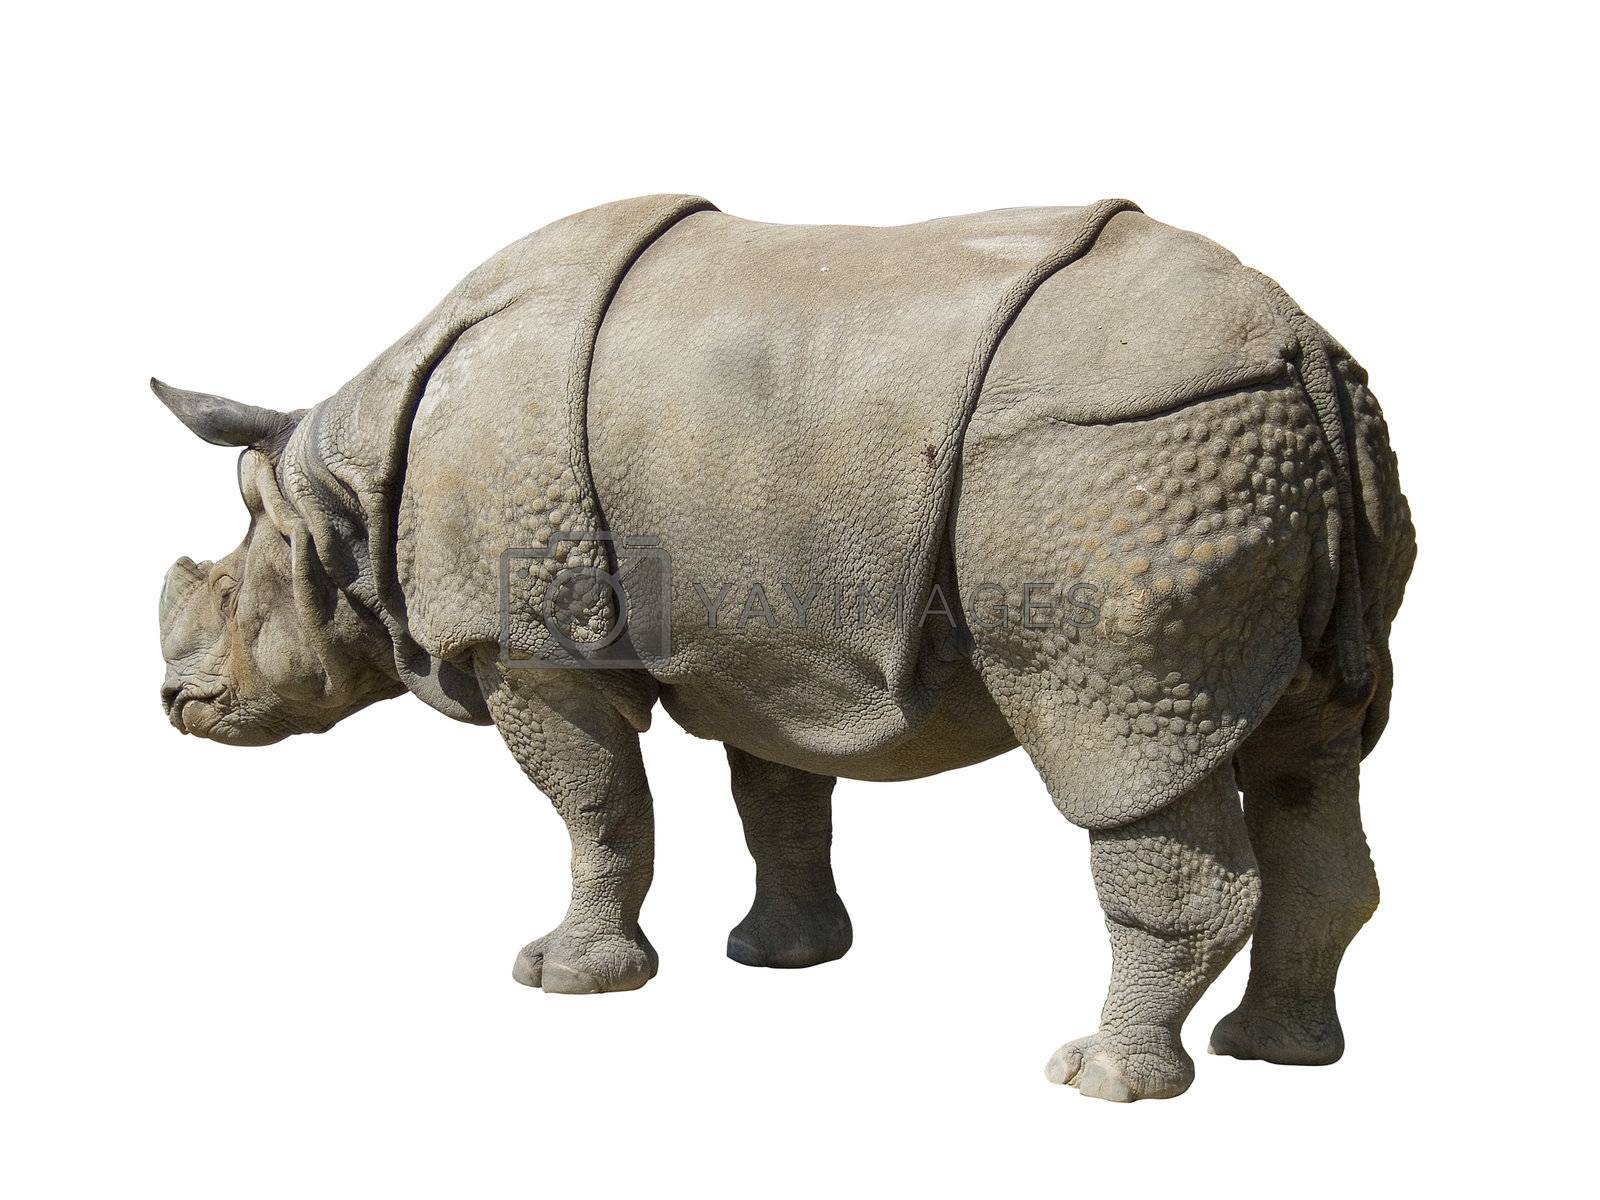 Royalty free image of rhinoceros isolated on white background by PauloResende